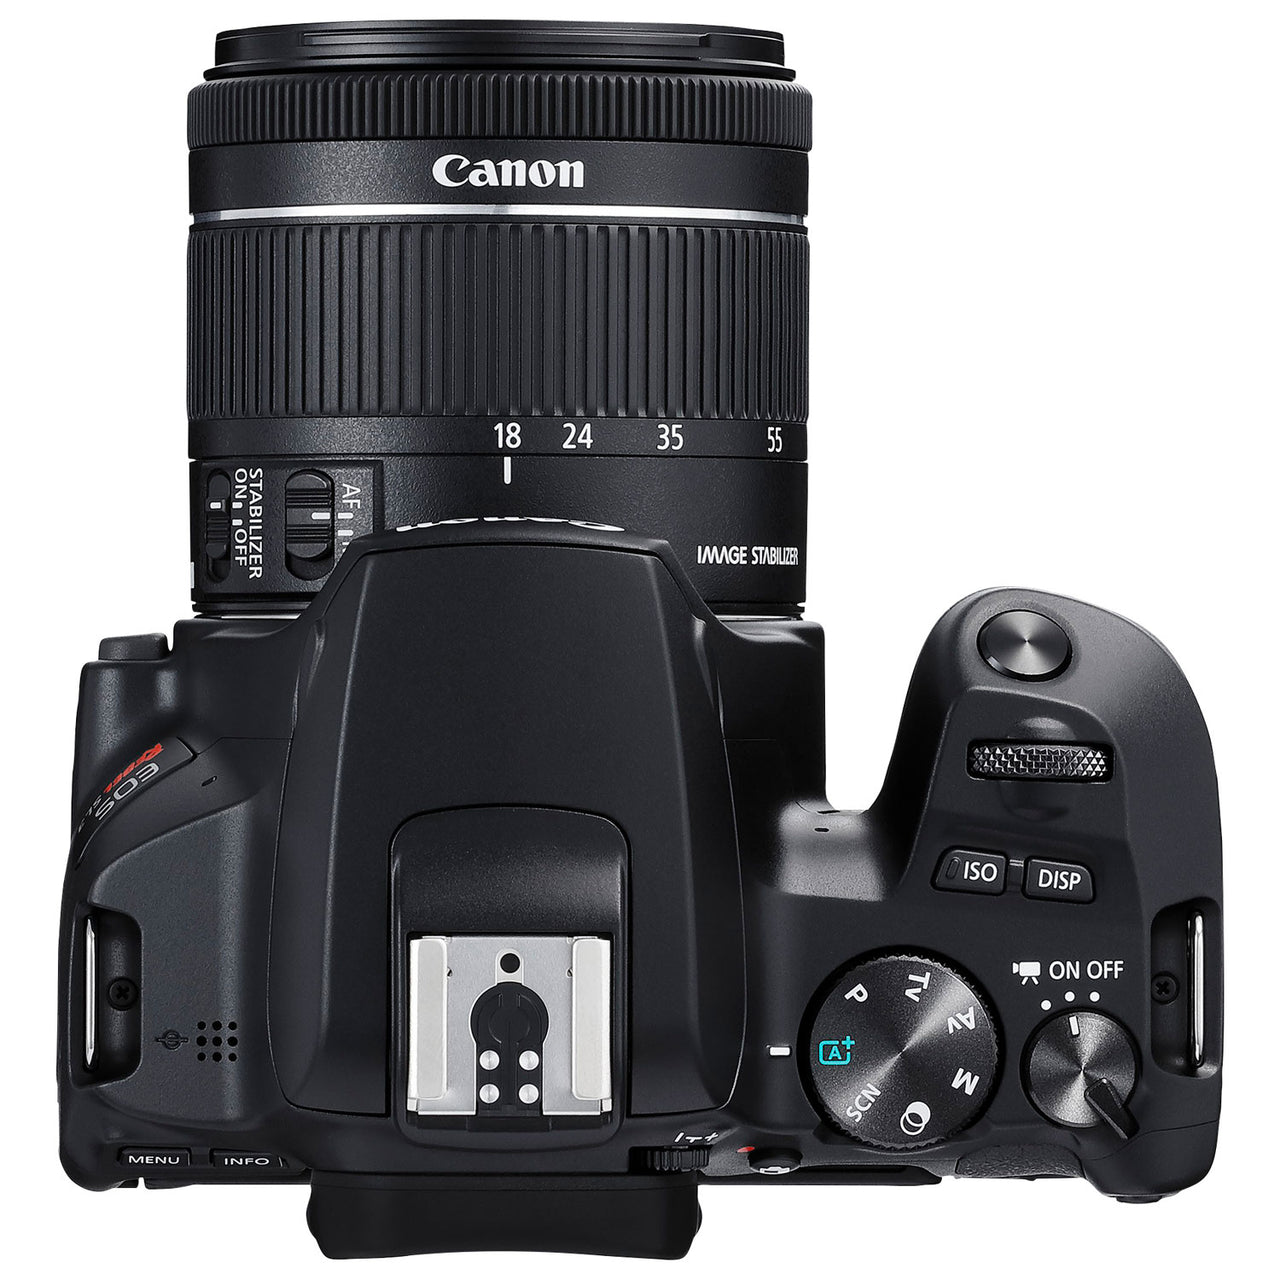 Canon EOS Rebel SL3 DSLR Camera with 18-55mm Lens Kit - Black